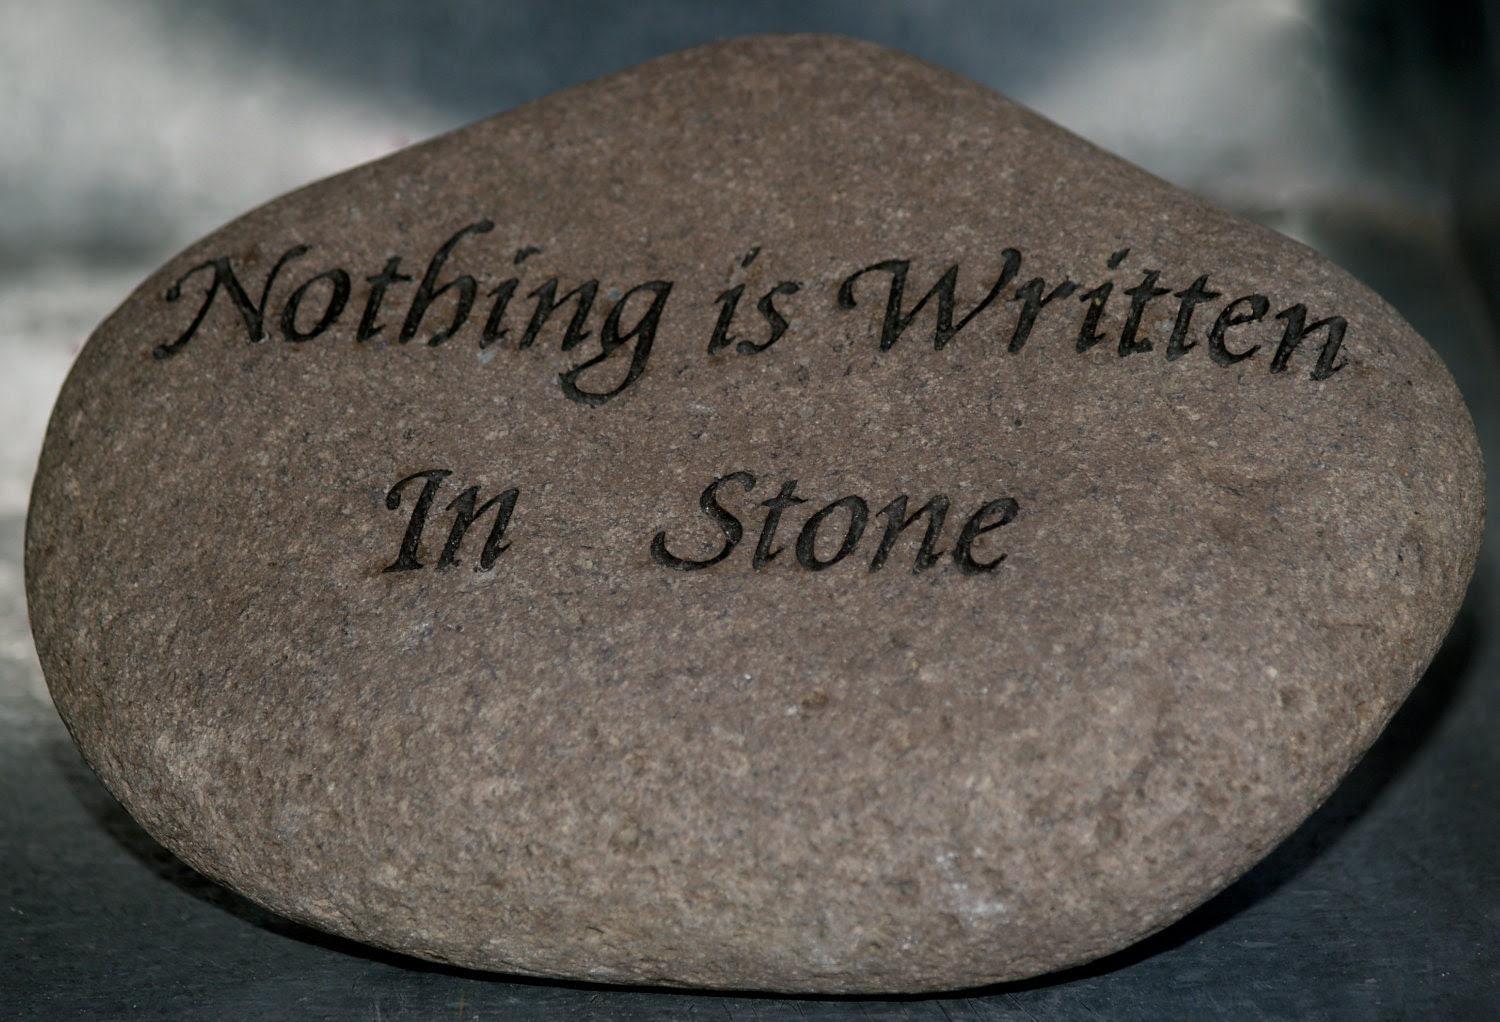 Stone me перевод. In Stone. Write on Stone. Nothing is written. Село Нинстинц writing on Stone.